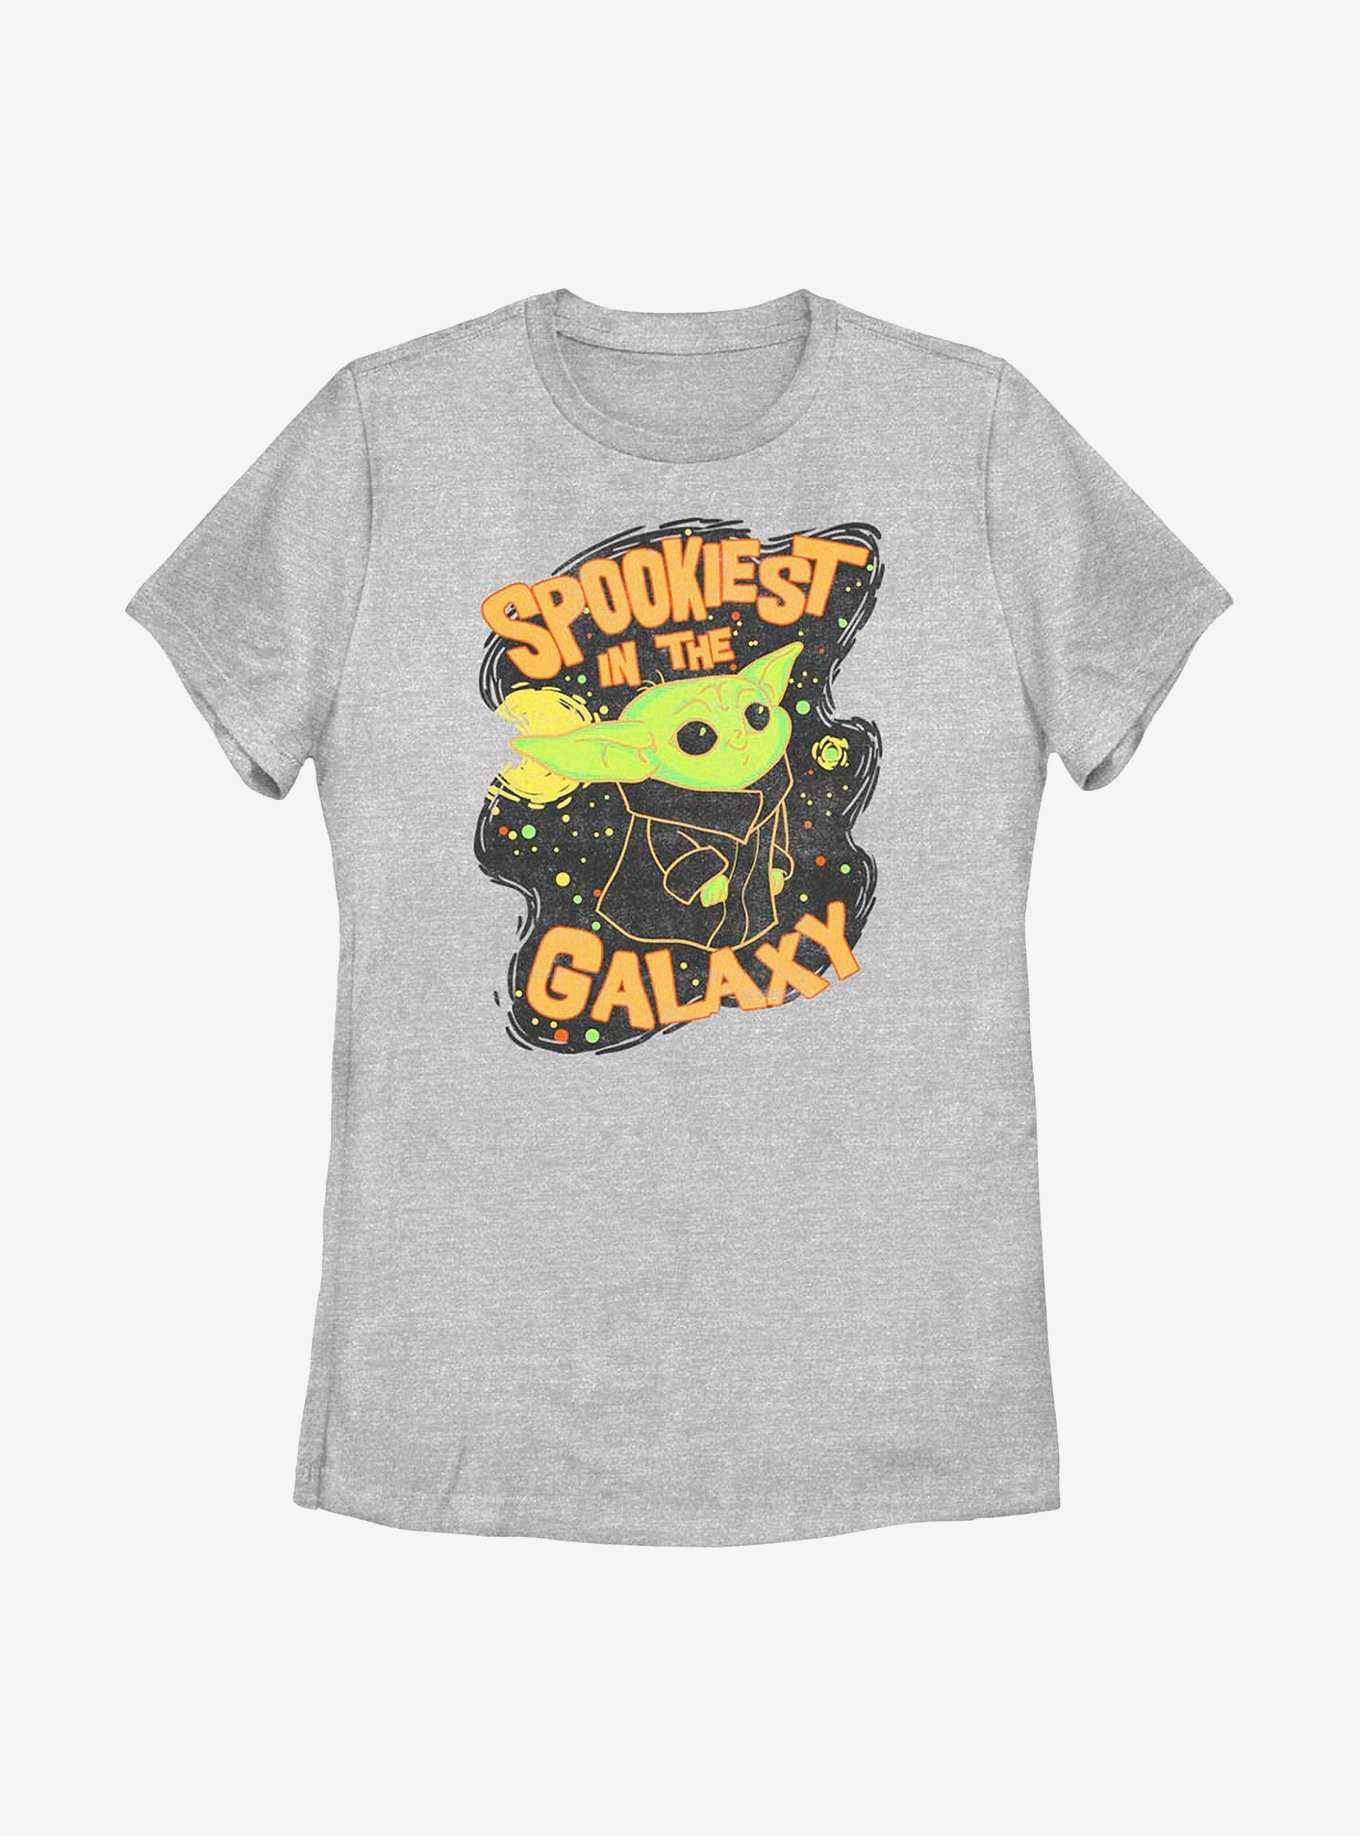 Star Wars The Mandalorian Spookiest in the Galaxy Womens T-Shirt, , hi-res